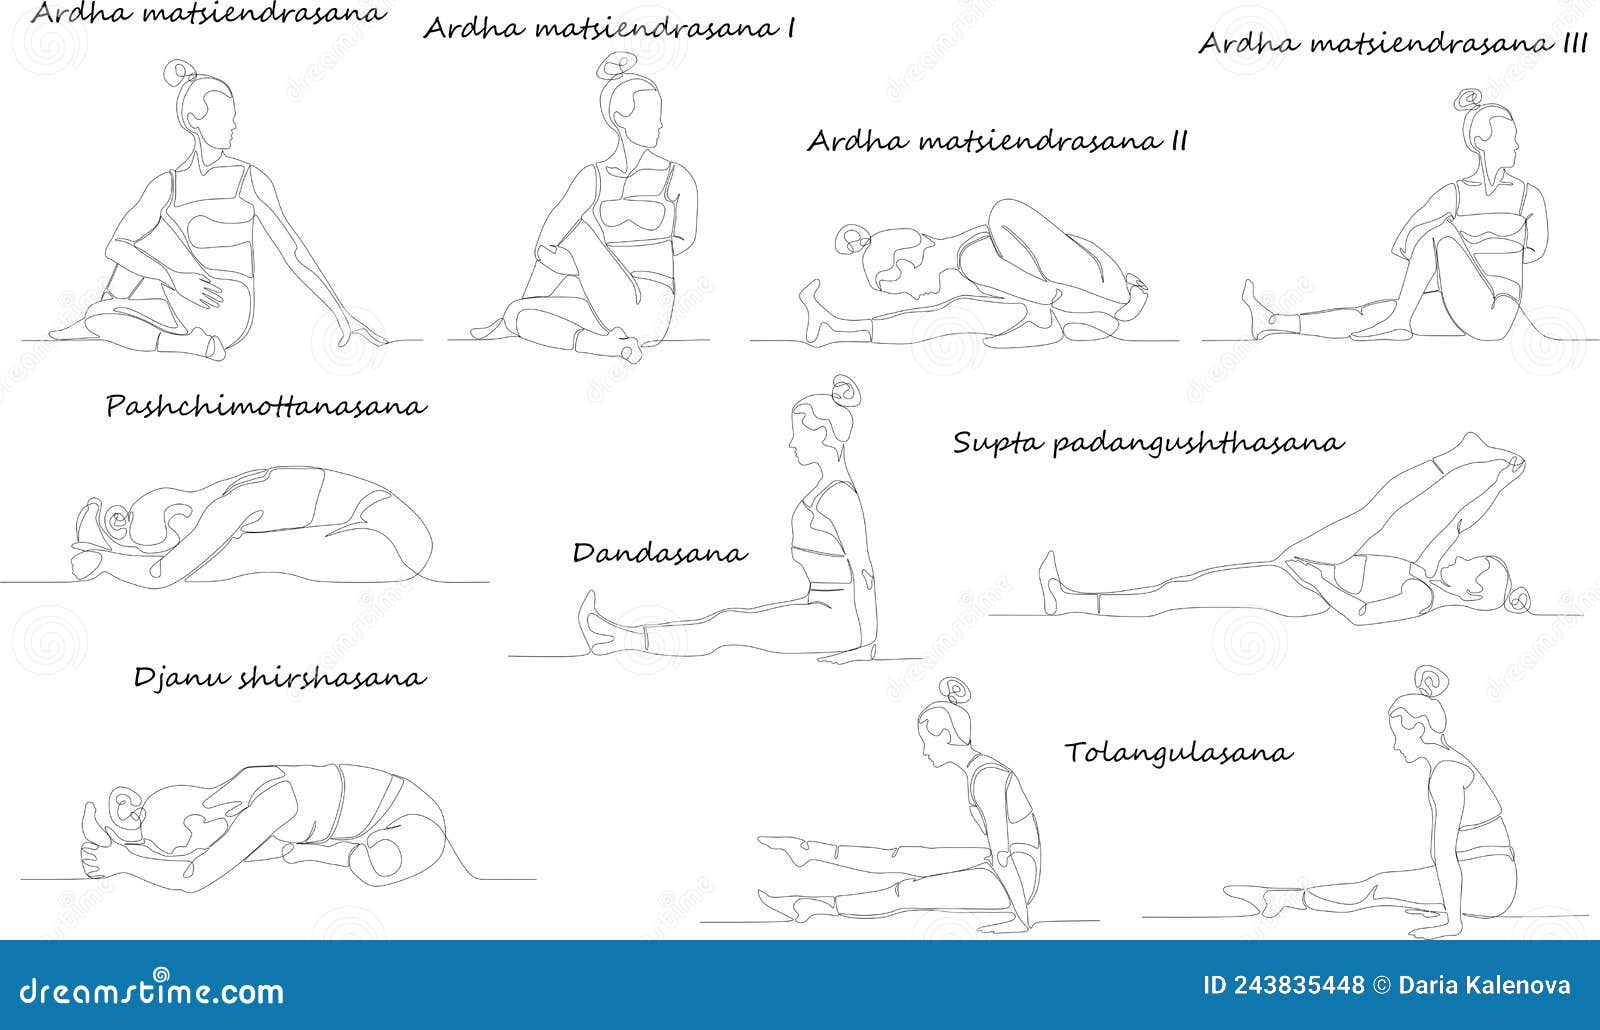 Beginner hatha yoga sequence | michellebirthmosonsubg1984's Ownd